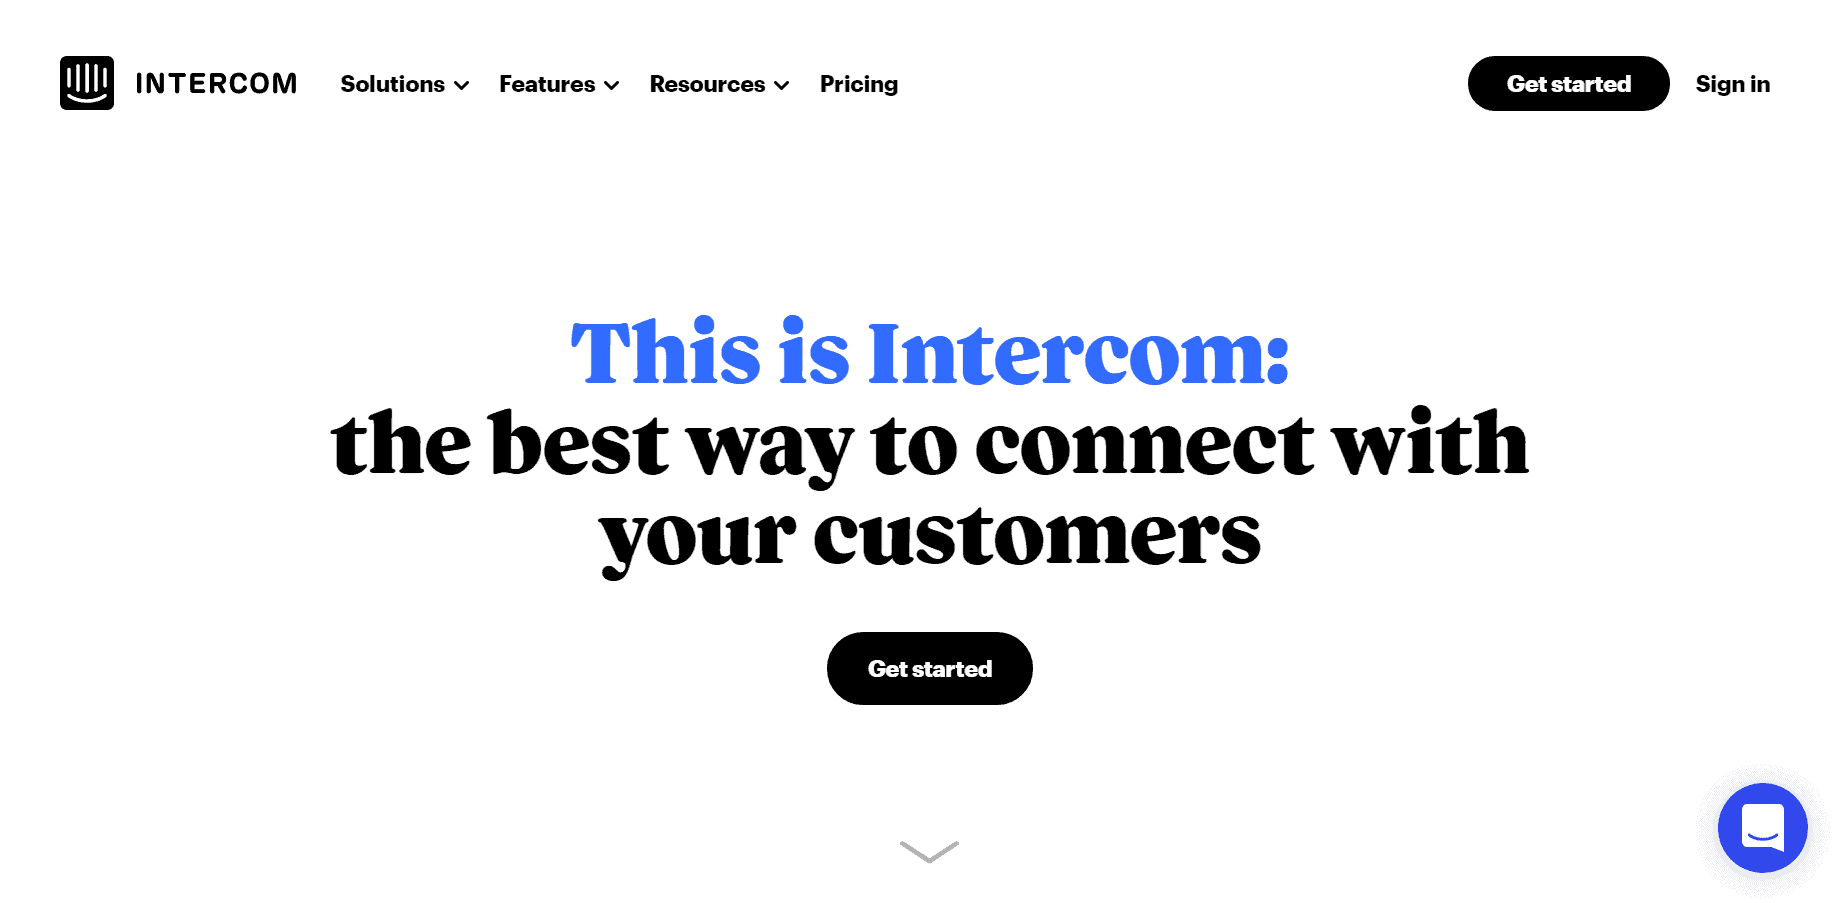 Intercom customer lifecycle marketing software